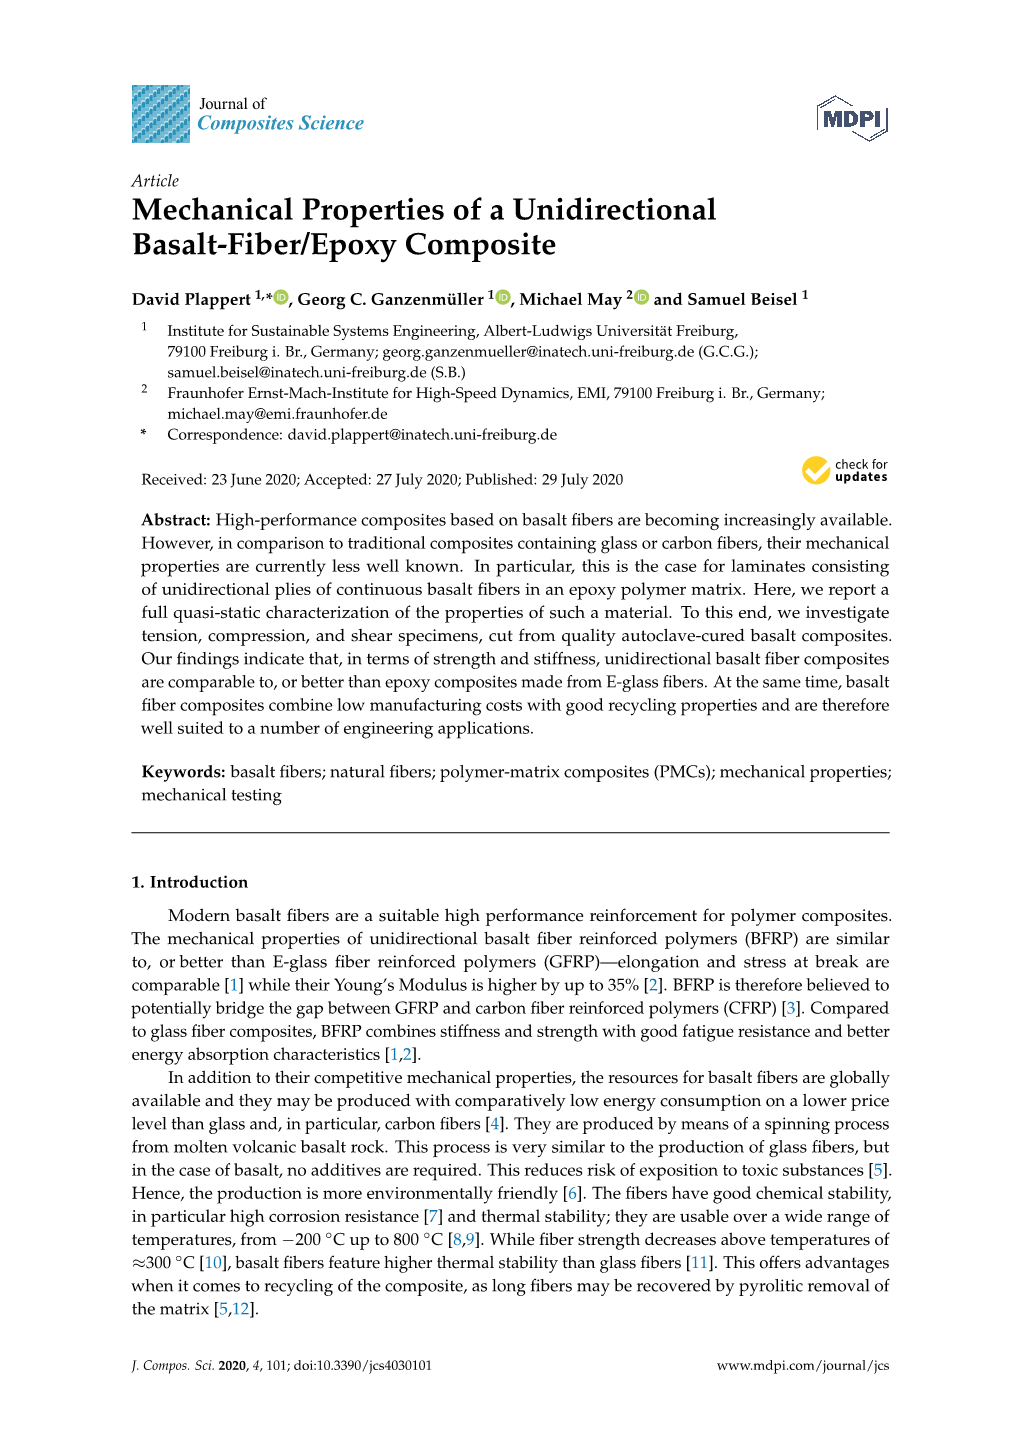 Mechanical Properties of a Unidirectional Basalt-Fiber/Epoxy Composite